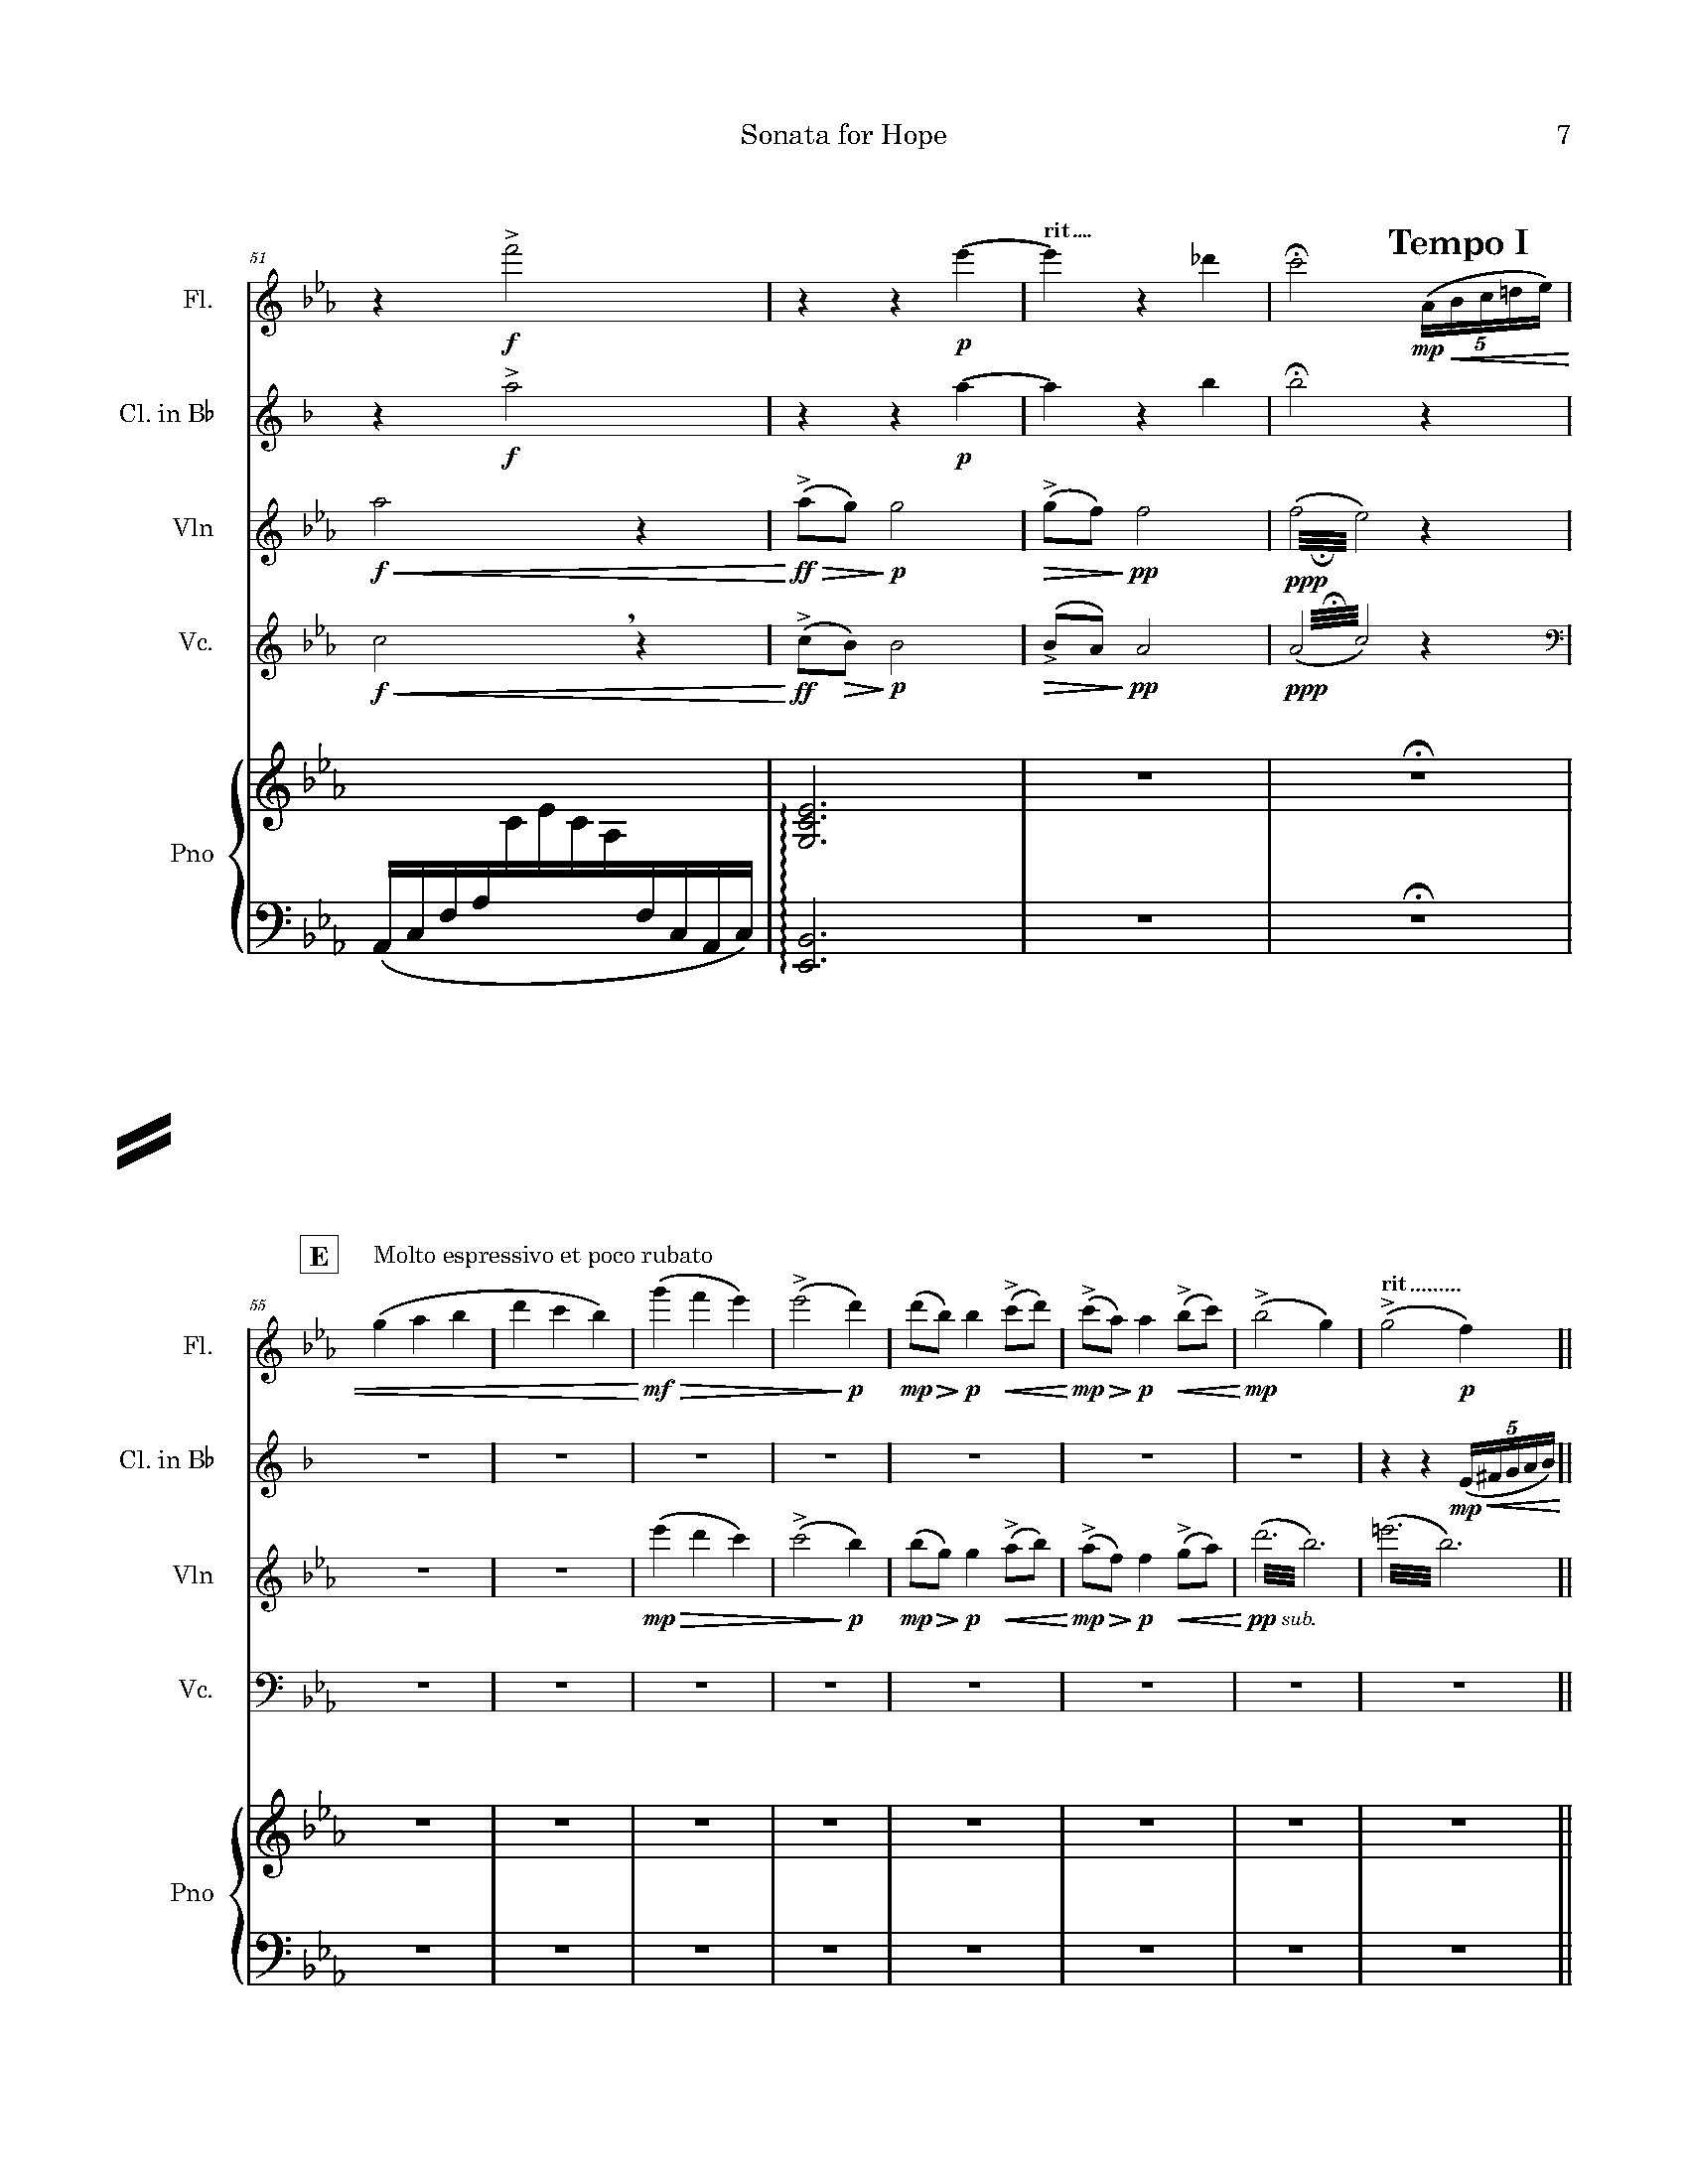 Sonata for Hope - Piano Score_Page_07.jpg